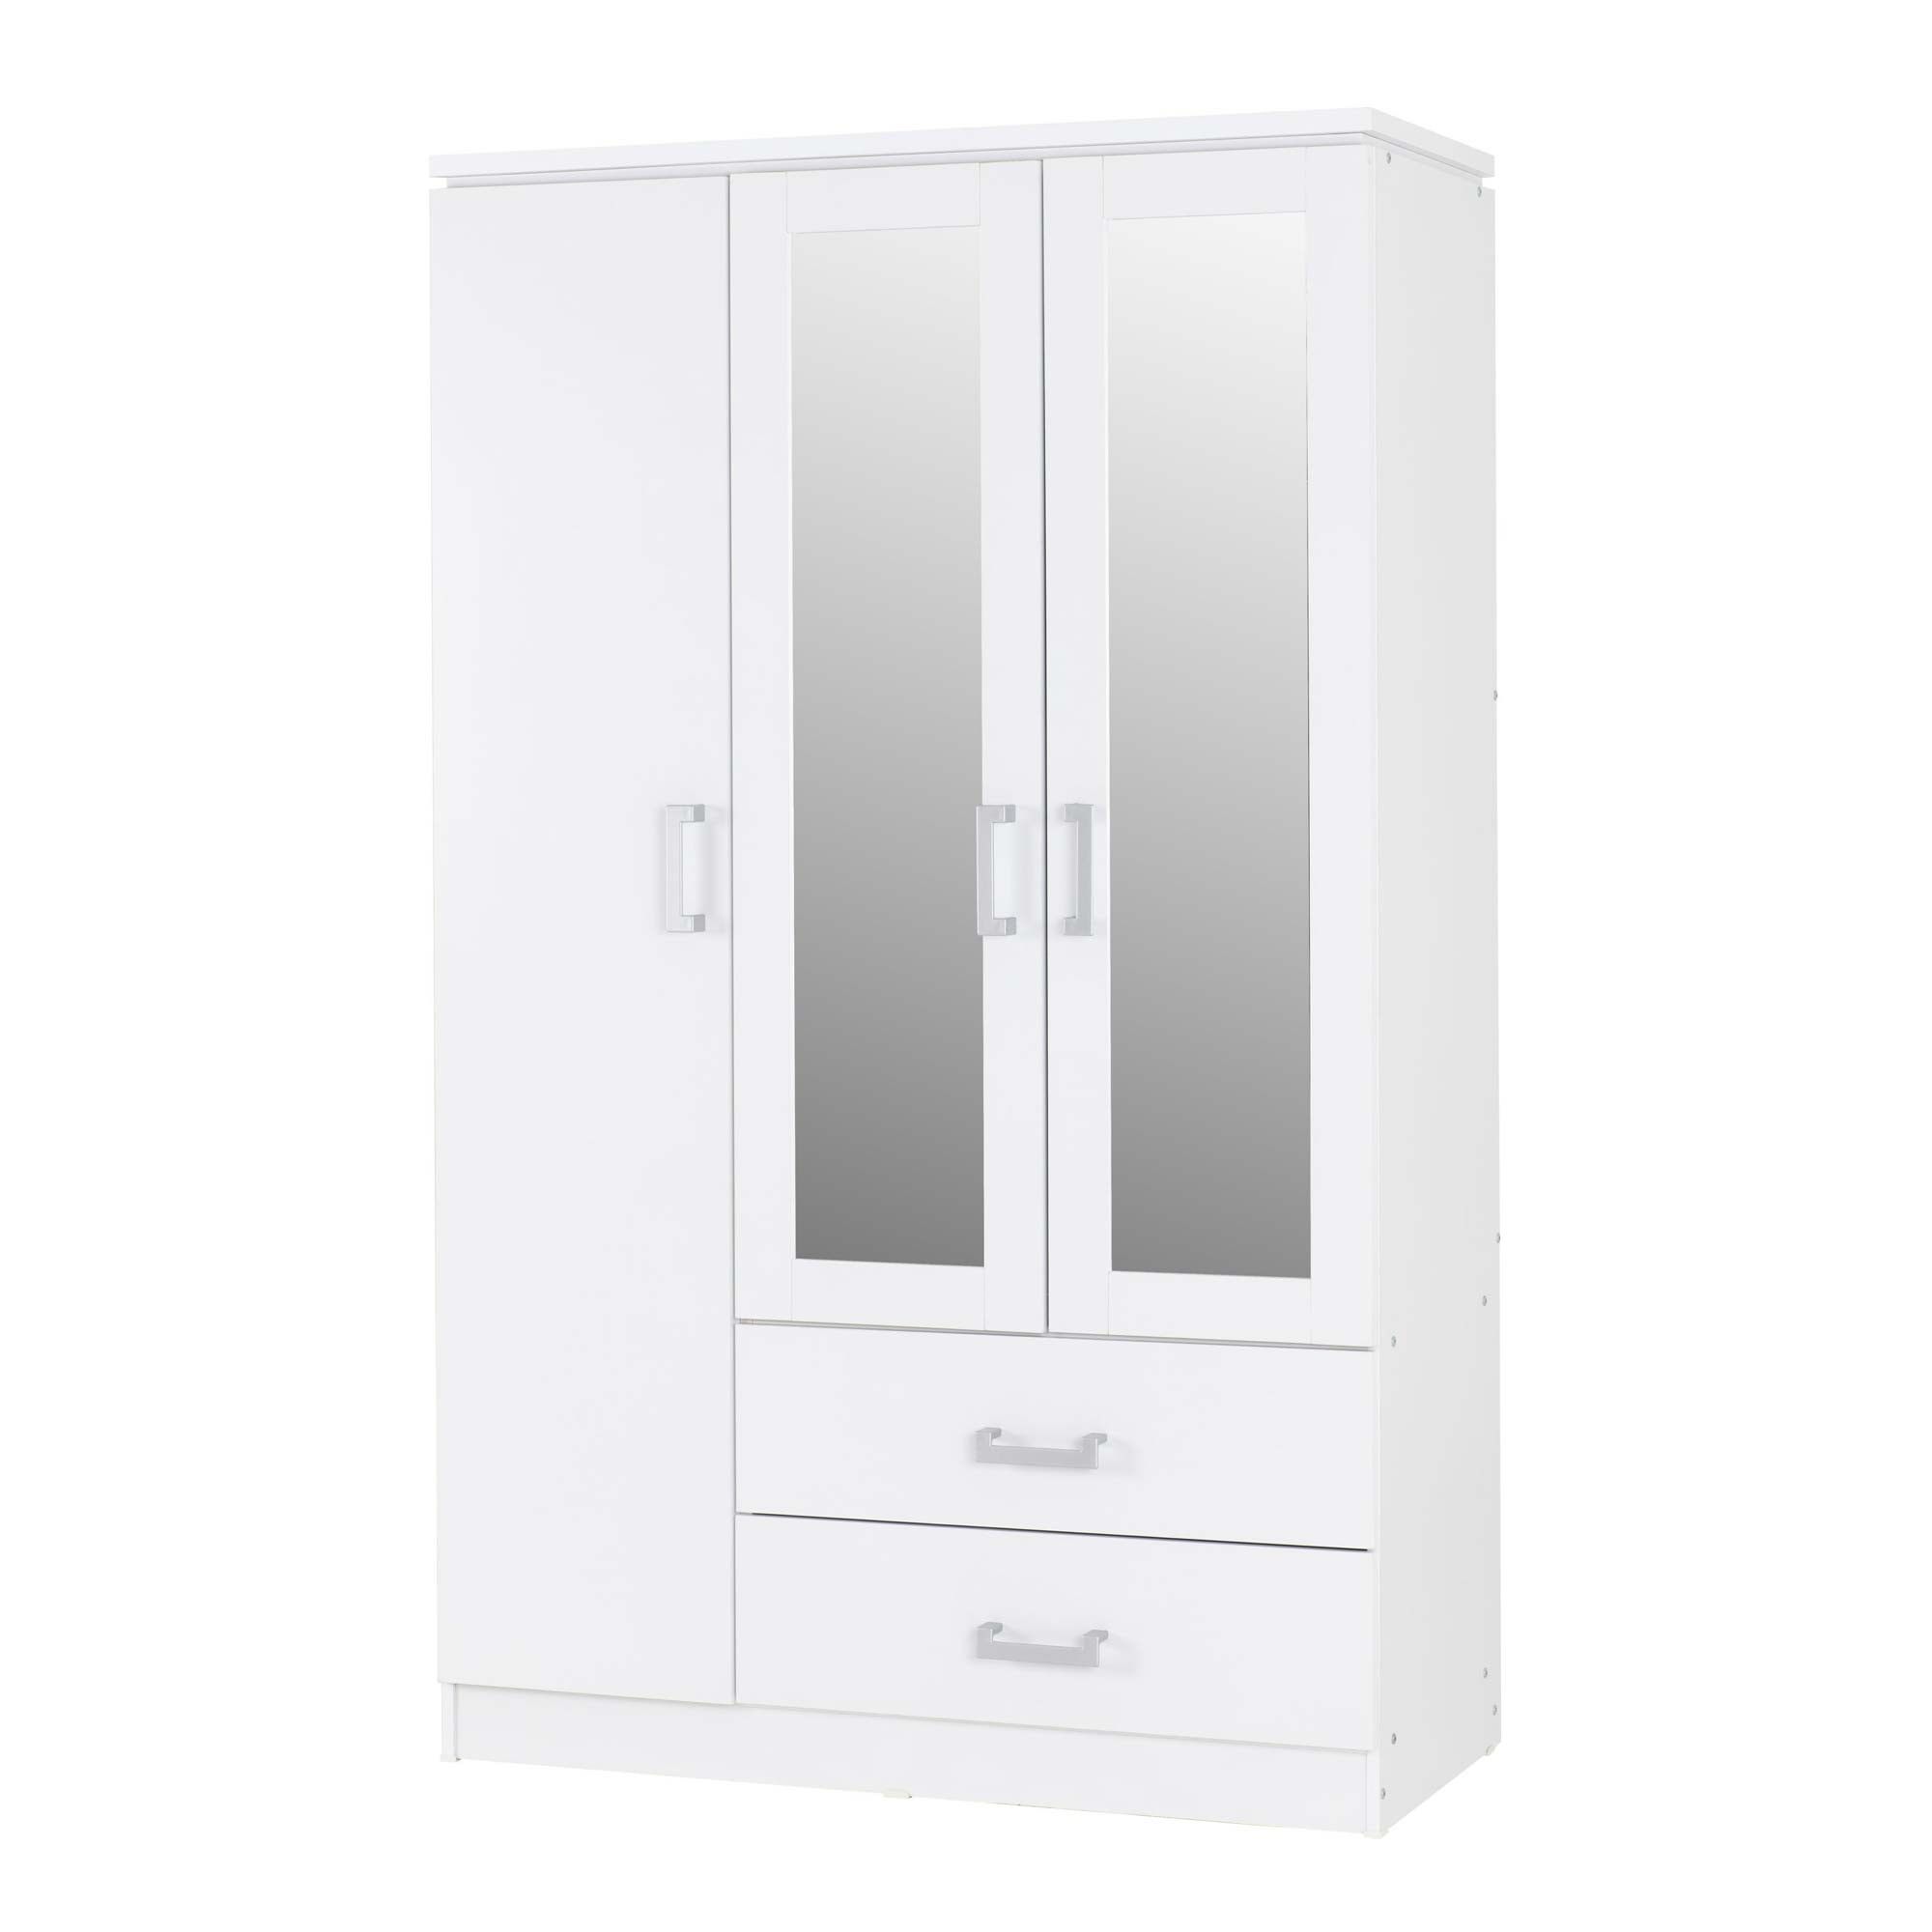 Charles White 3 Door 2 Drawer Wardrobe | Wardrobes | Bedroom Storage With White 3 Door Wardrobes With Drawers (Gallery 5 of 20)